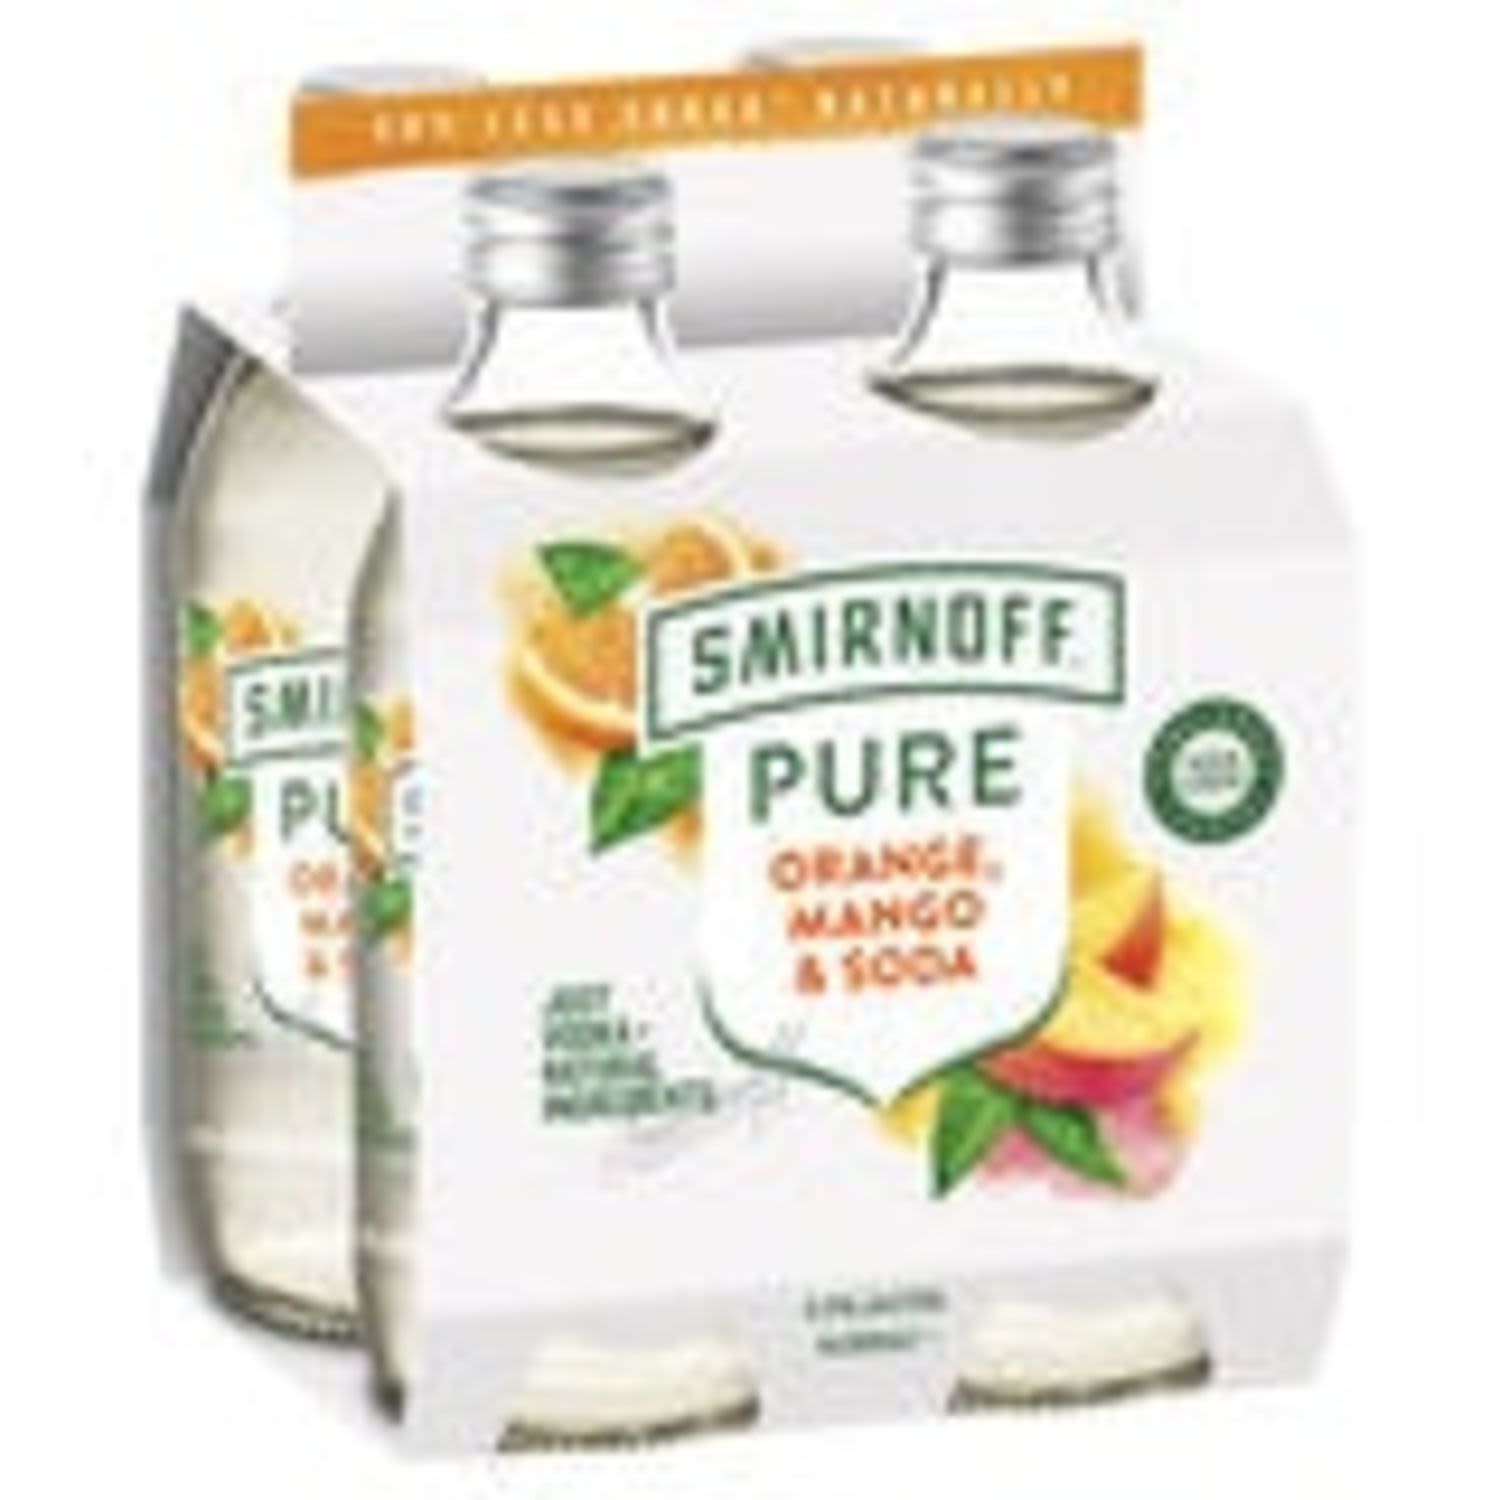 Smirnoff Pure Orange Mango Soda 4.5% Bottle 300mL 4 Pack